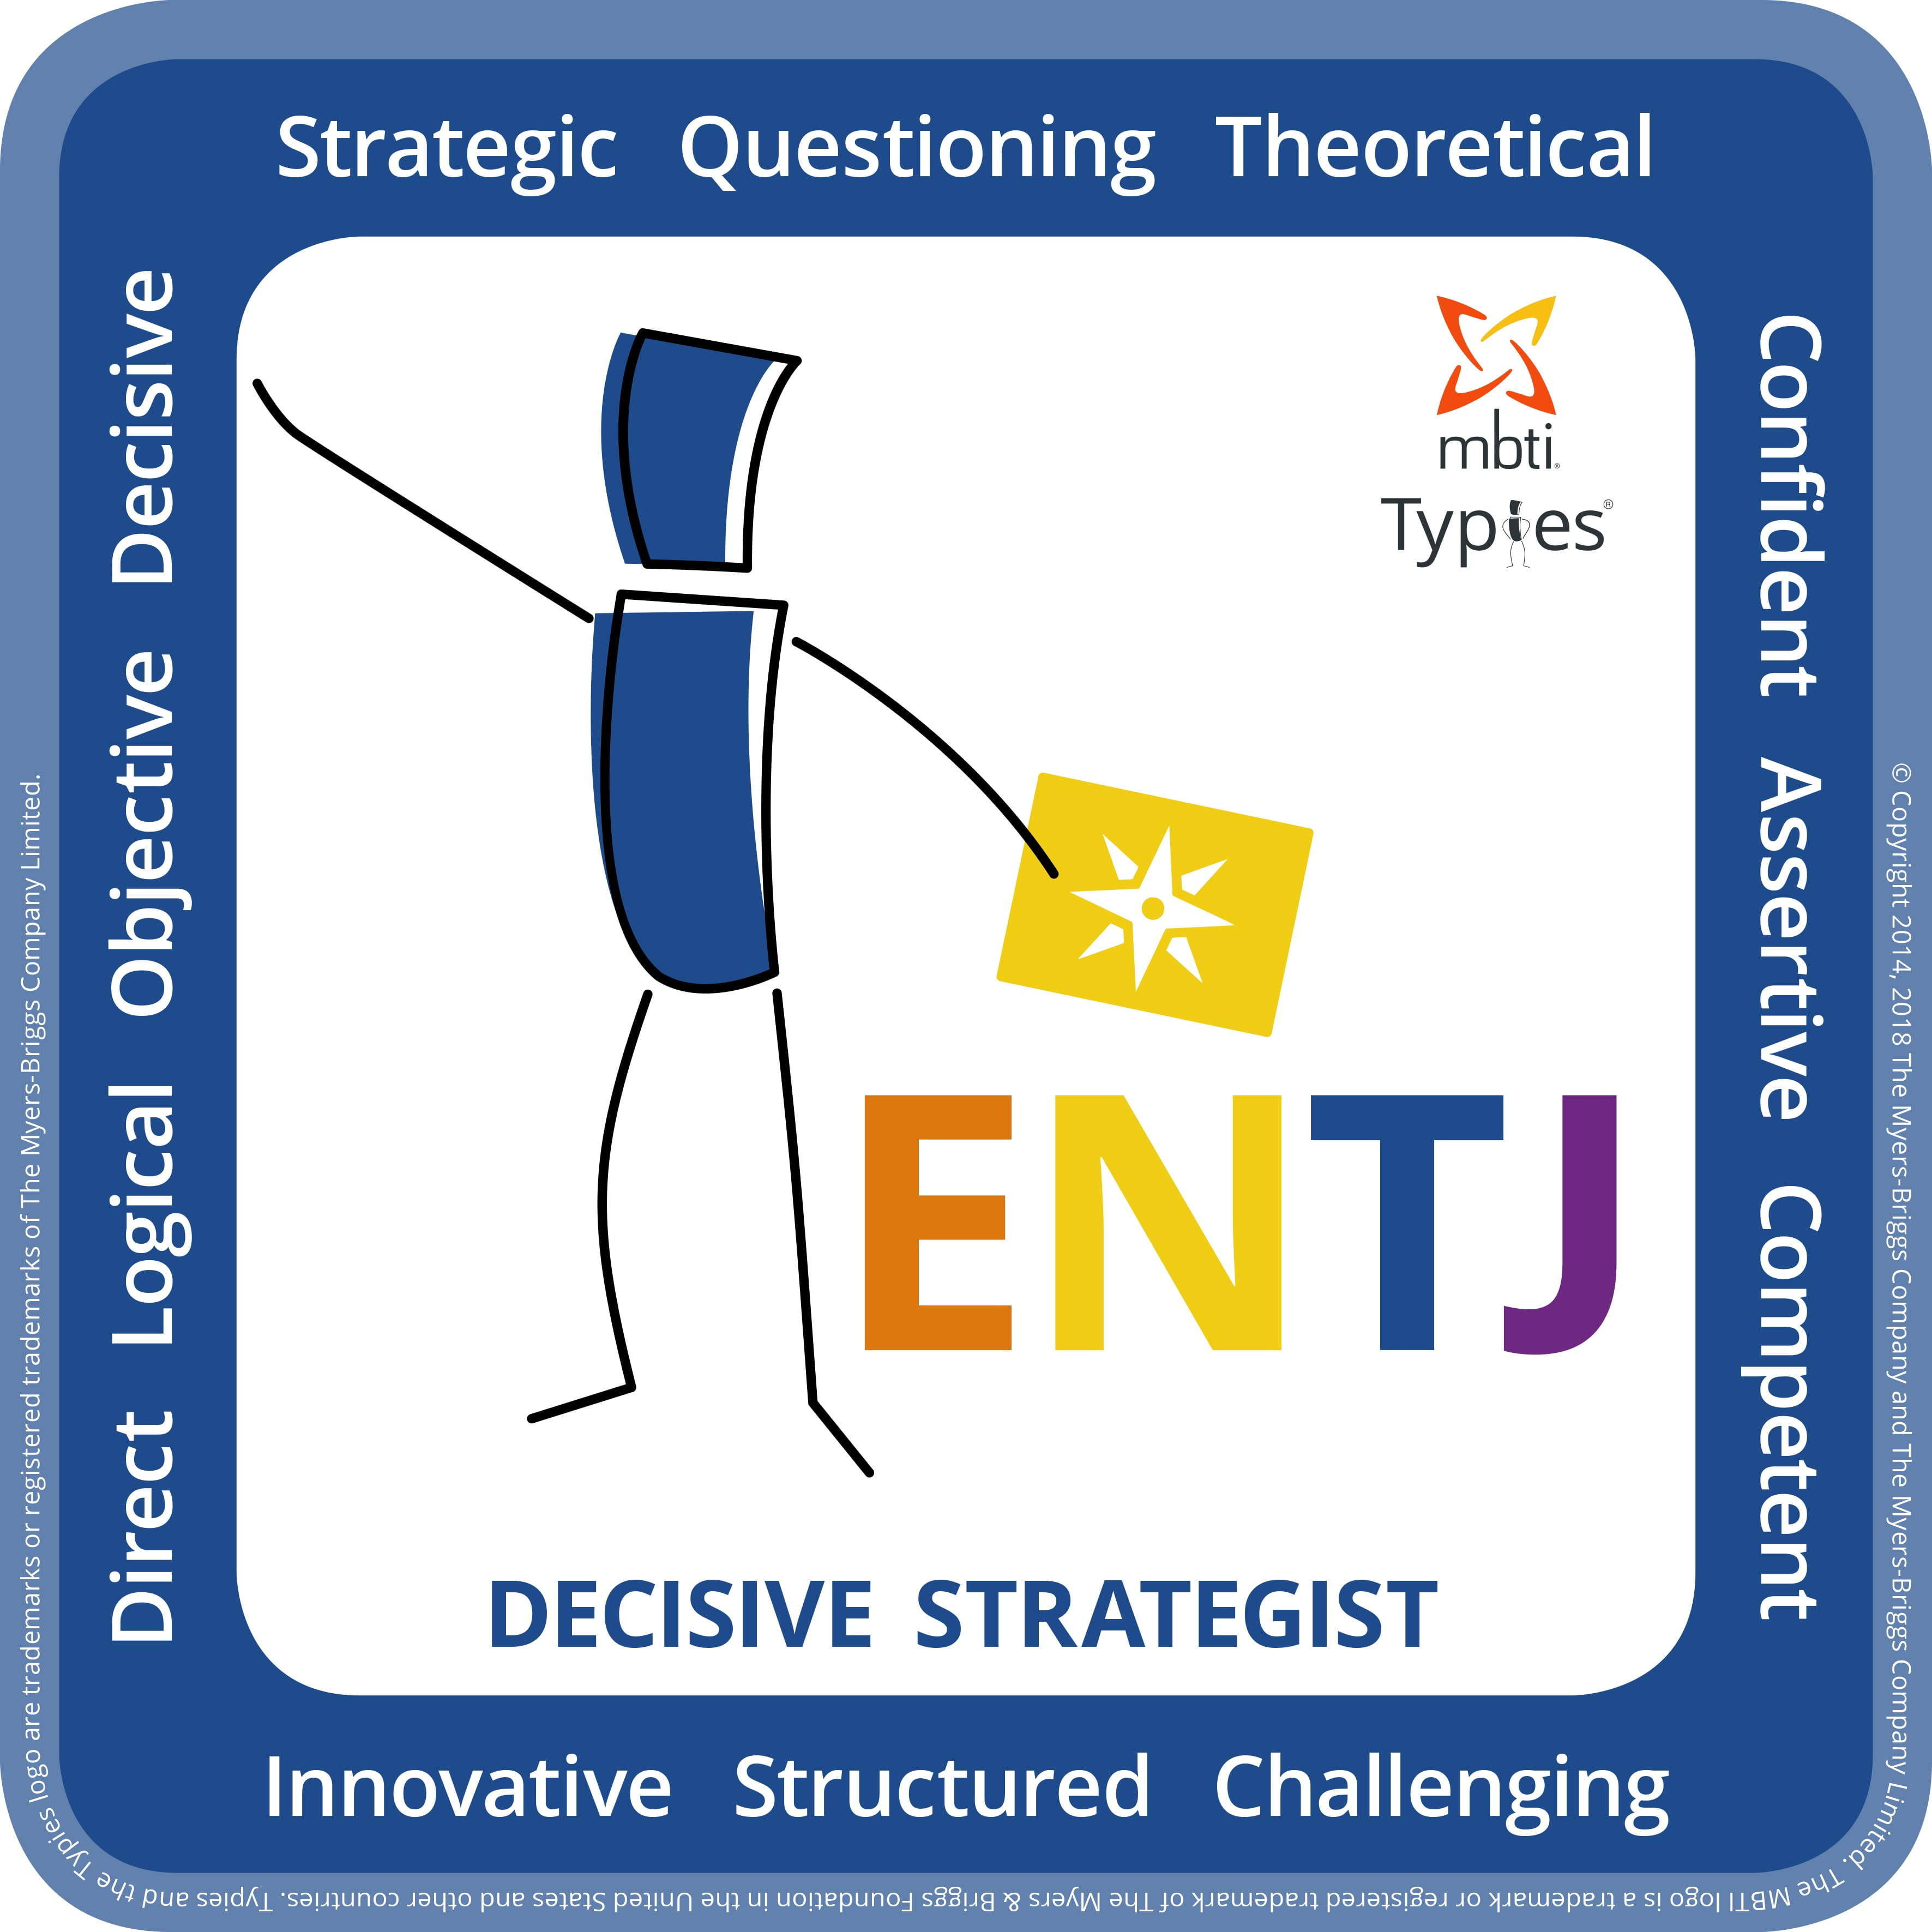 Draluc MBTI Personality Type: ENTP or ENTJ?